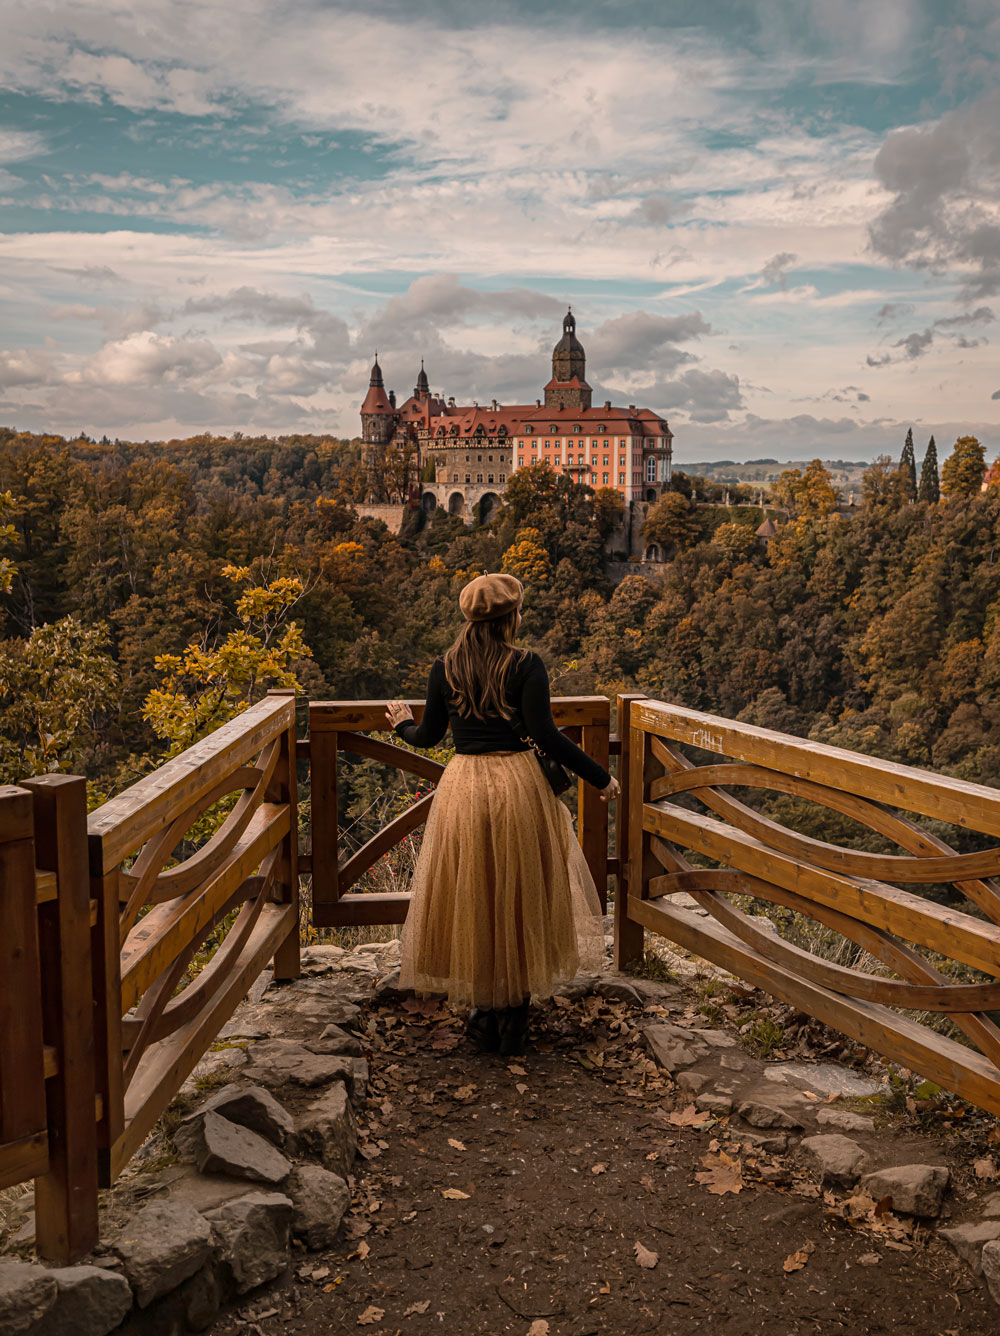 Książ Castle things-to-do-in-wroclaw-poland-kelseyinlondon-kelsey-heinrichs-uk-travel-blogger-Wrocław-travel-guide